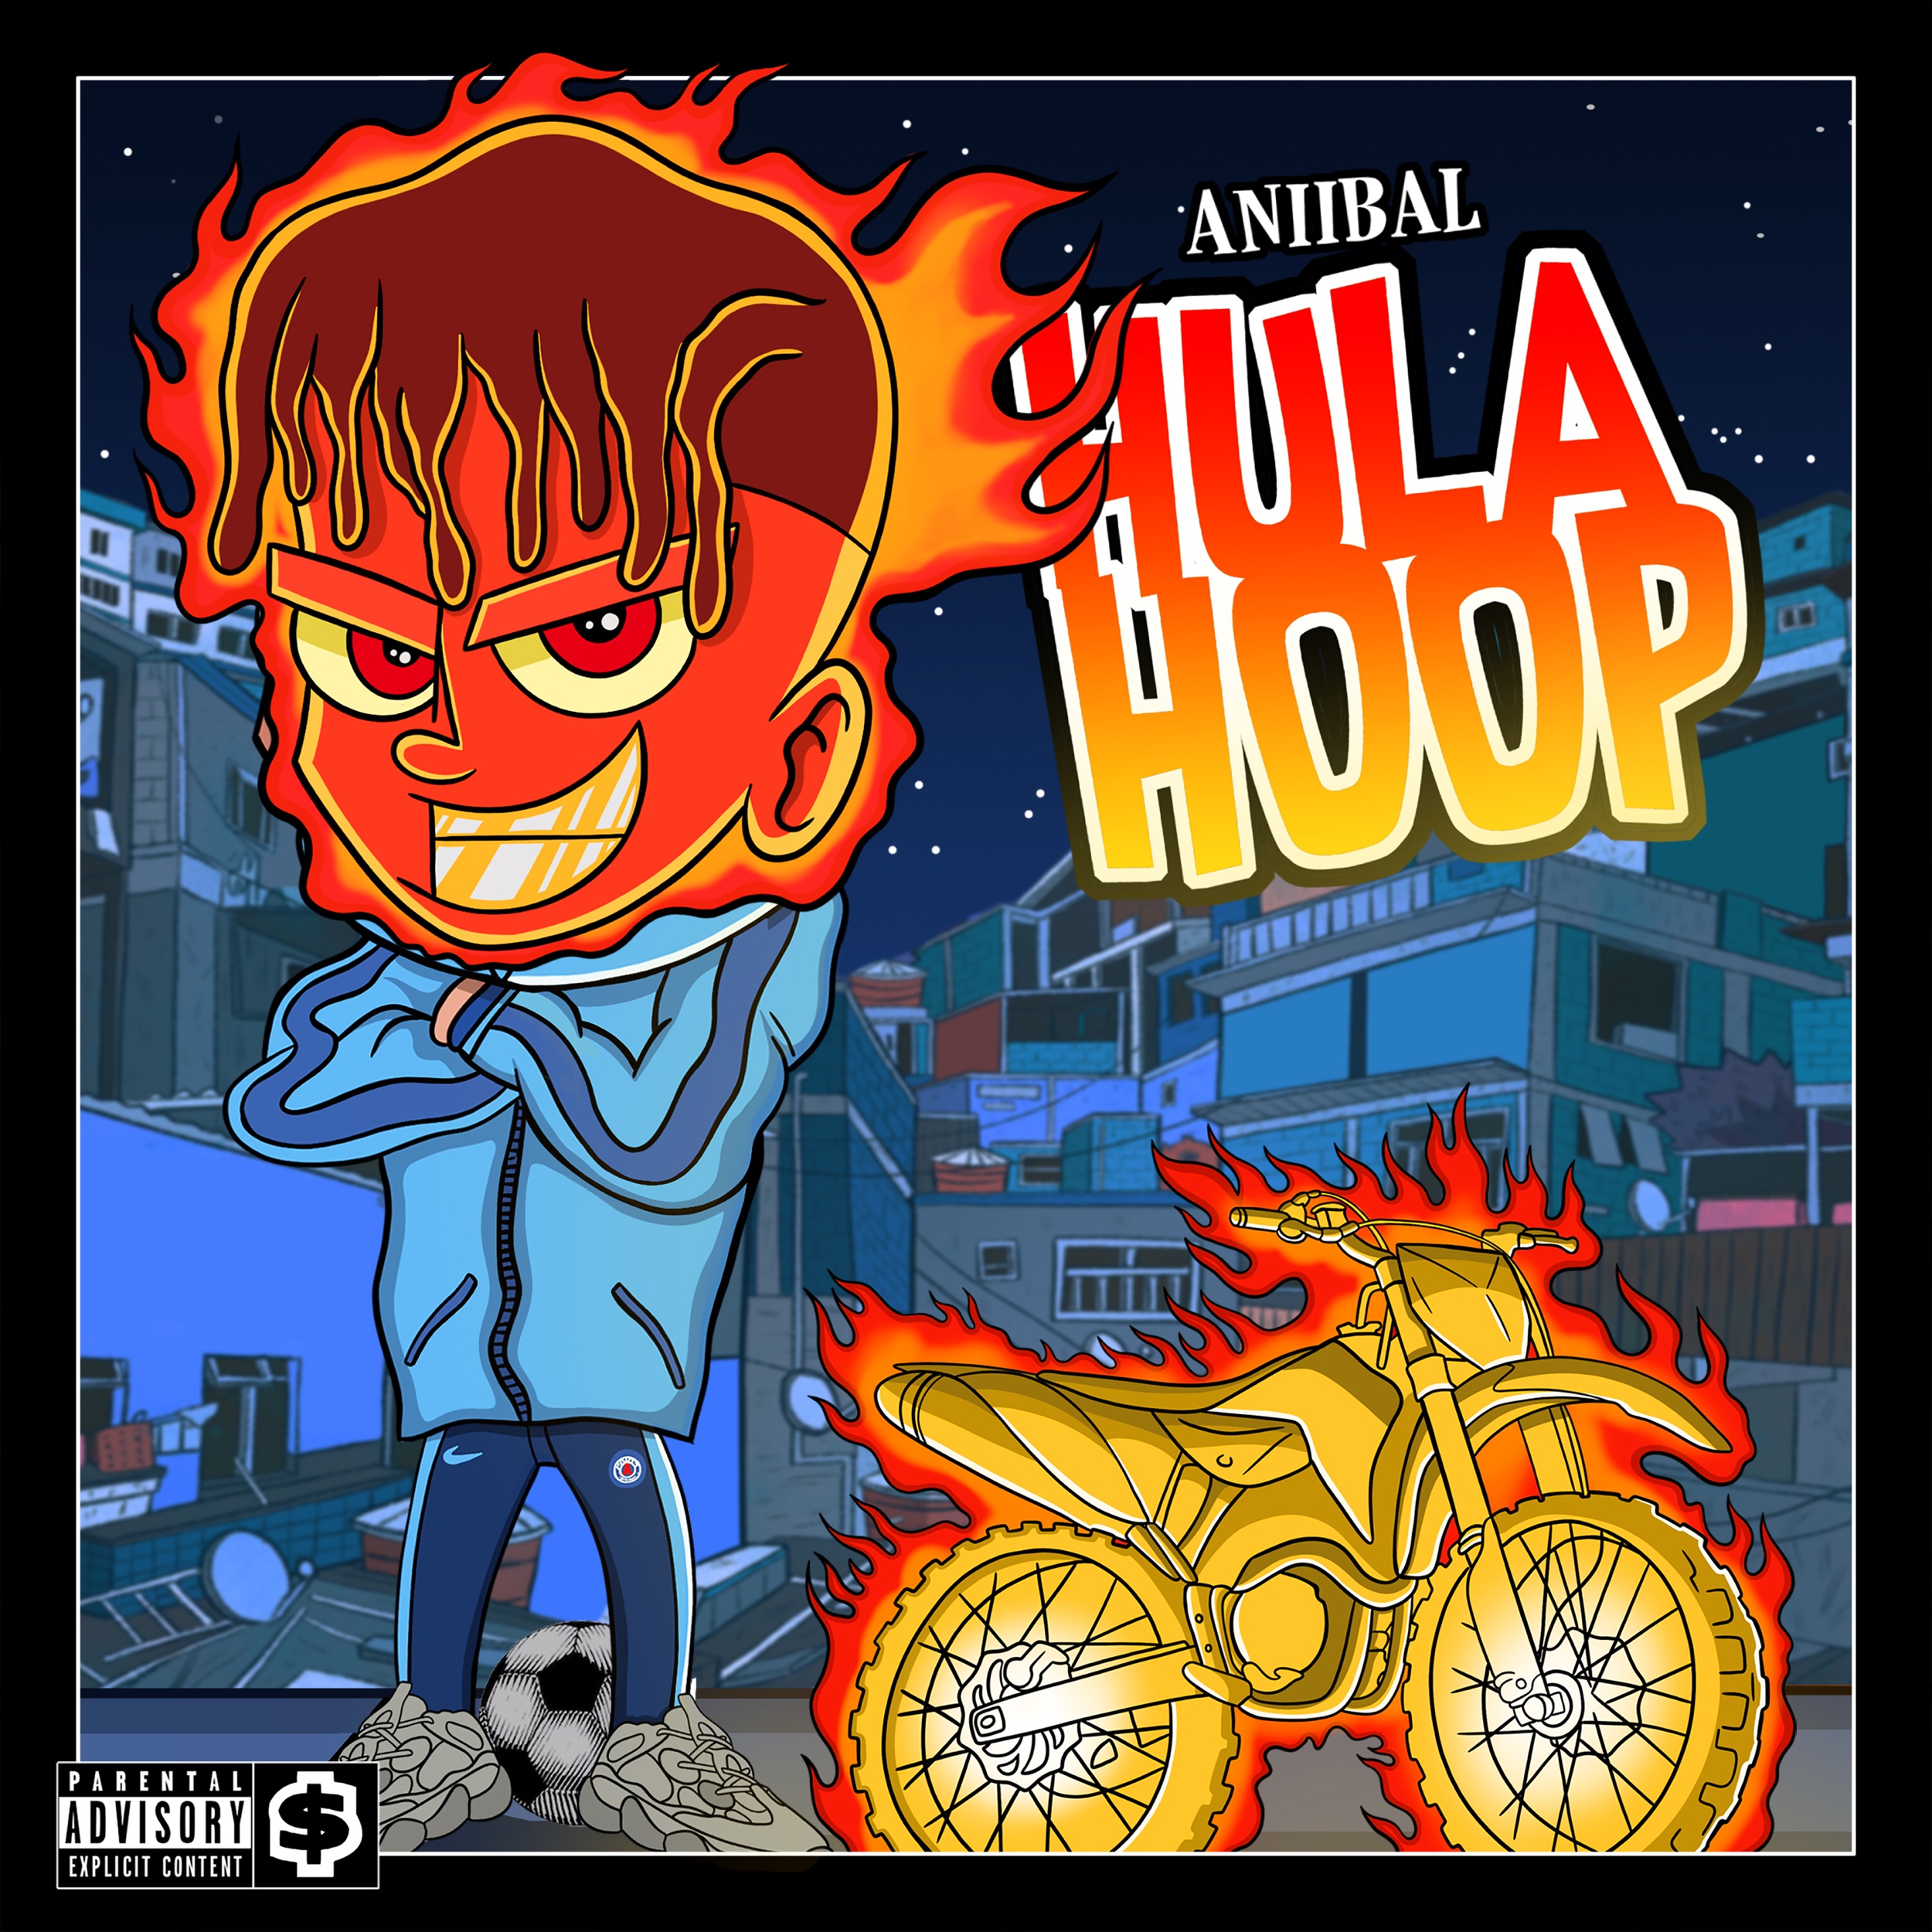 Aniibal-hula_Hoop